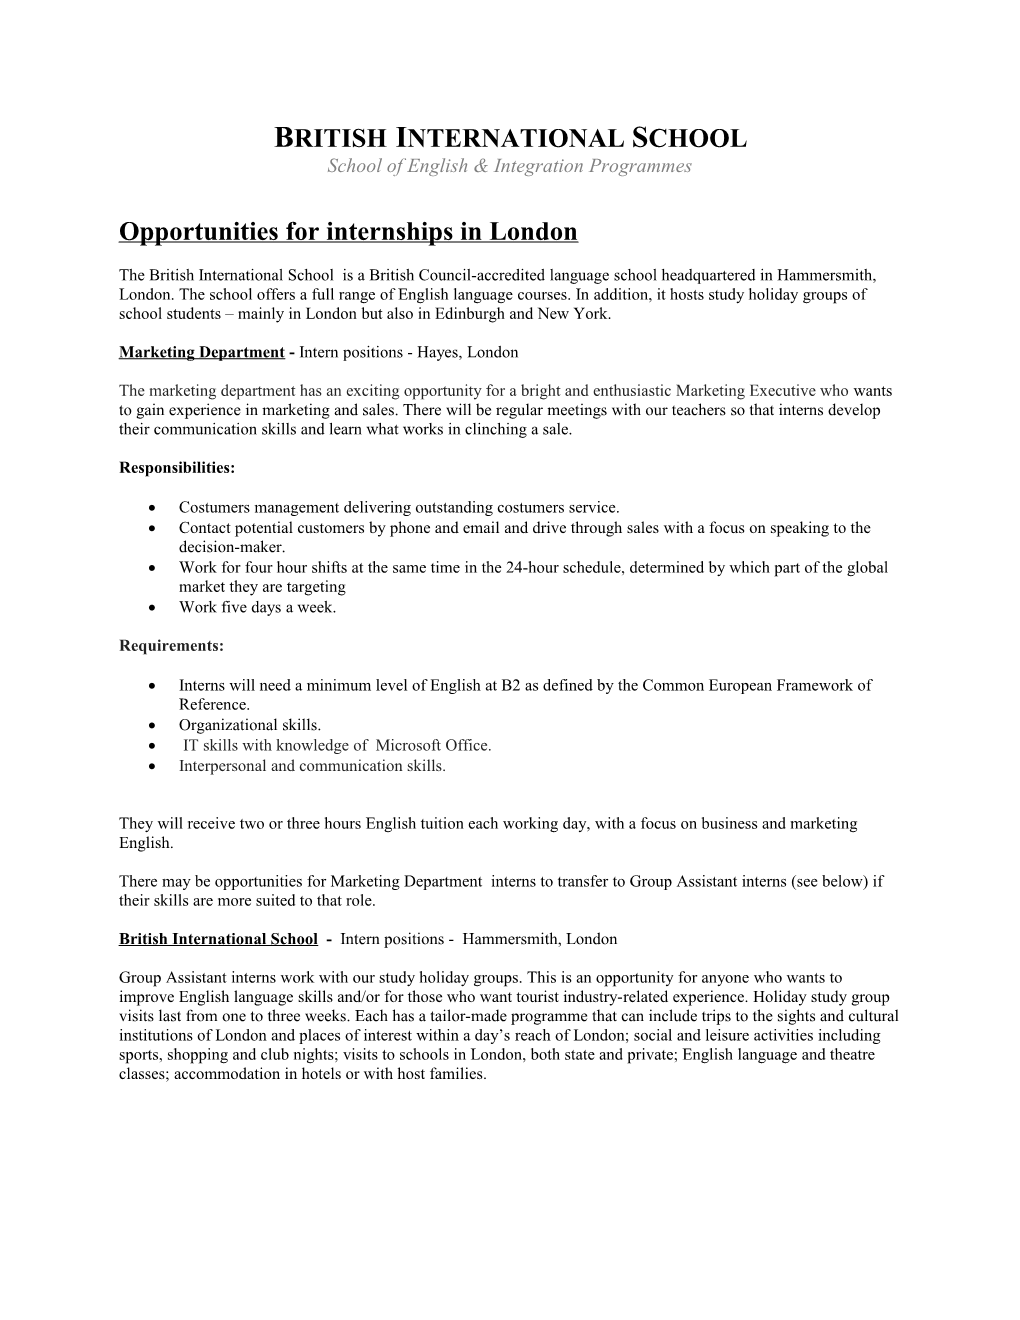 Opportunities for Internships in London